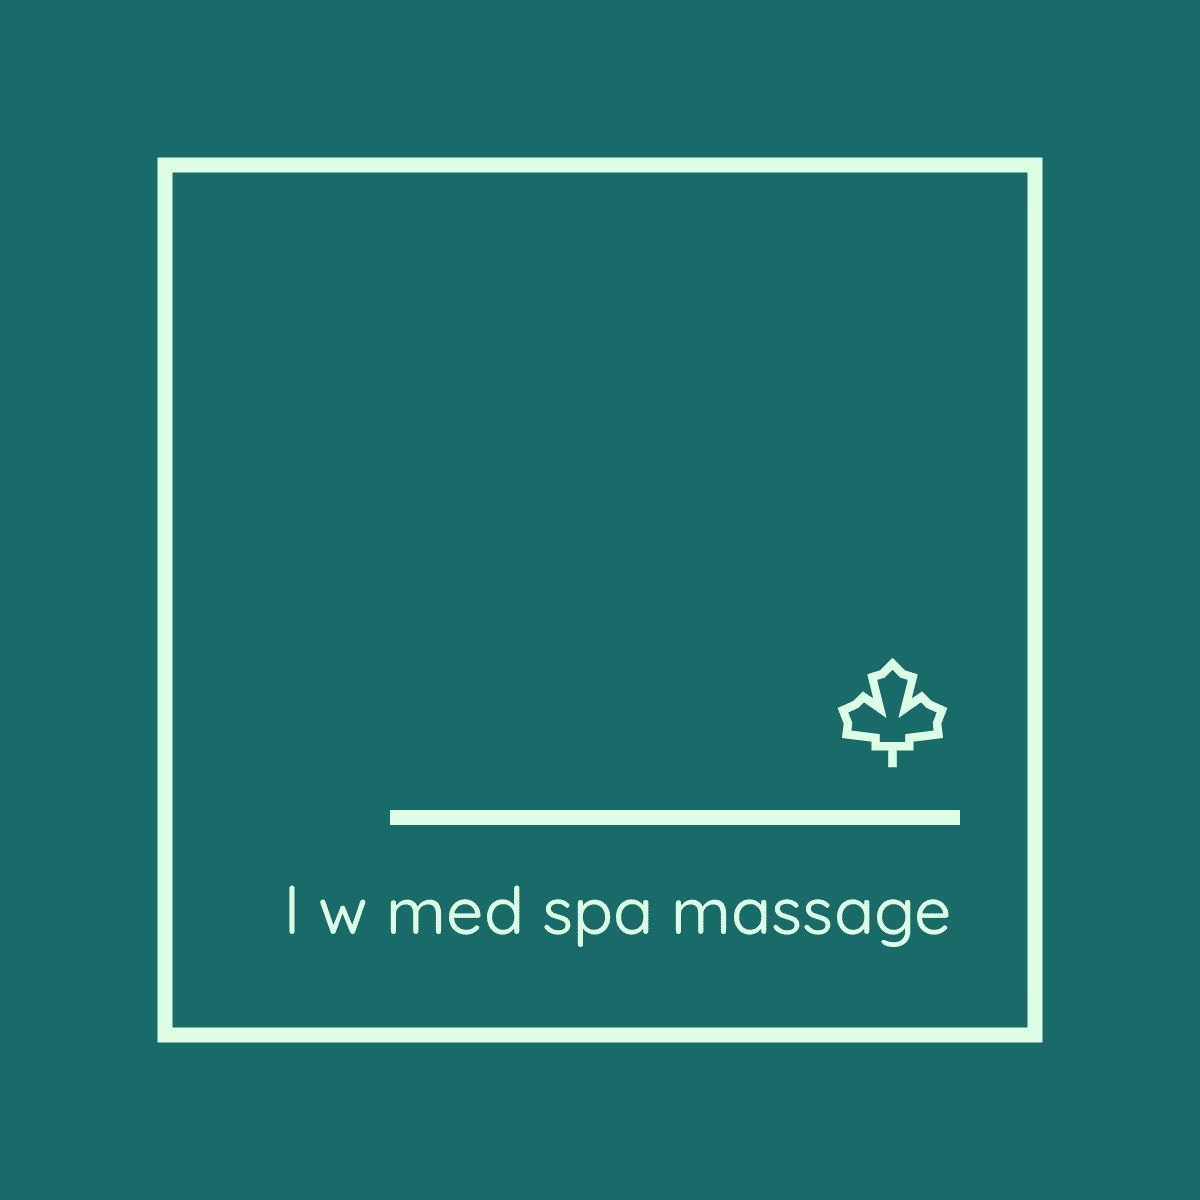 L W Med Spa Massage, 4103 Neptune Rd, St Cloud, 34769